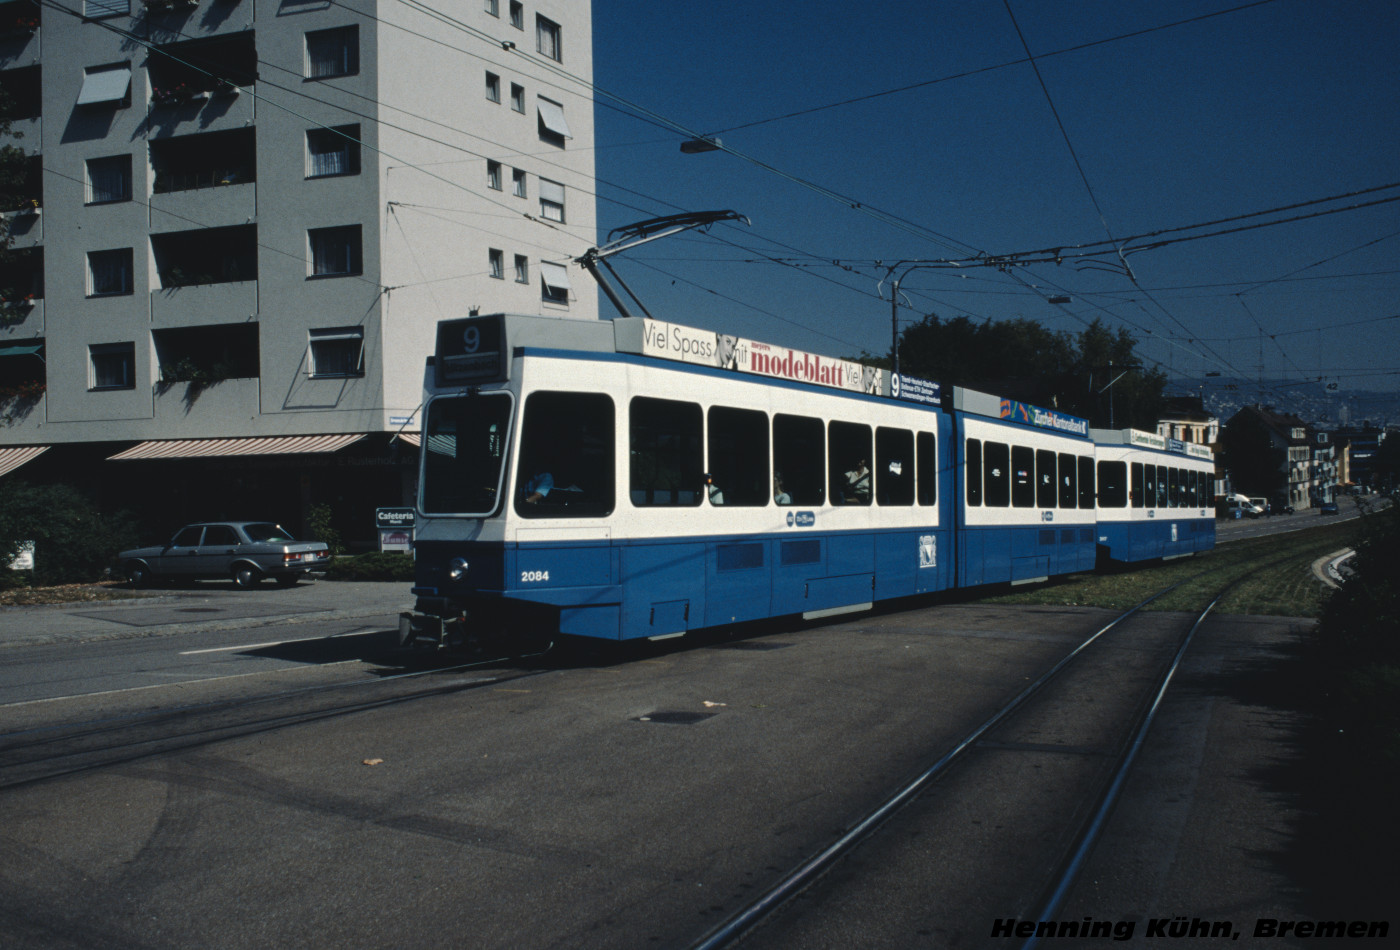 Schindler-Be4/6 (Tram 2000) #2084